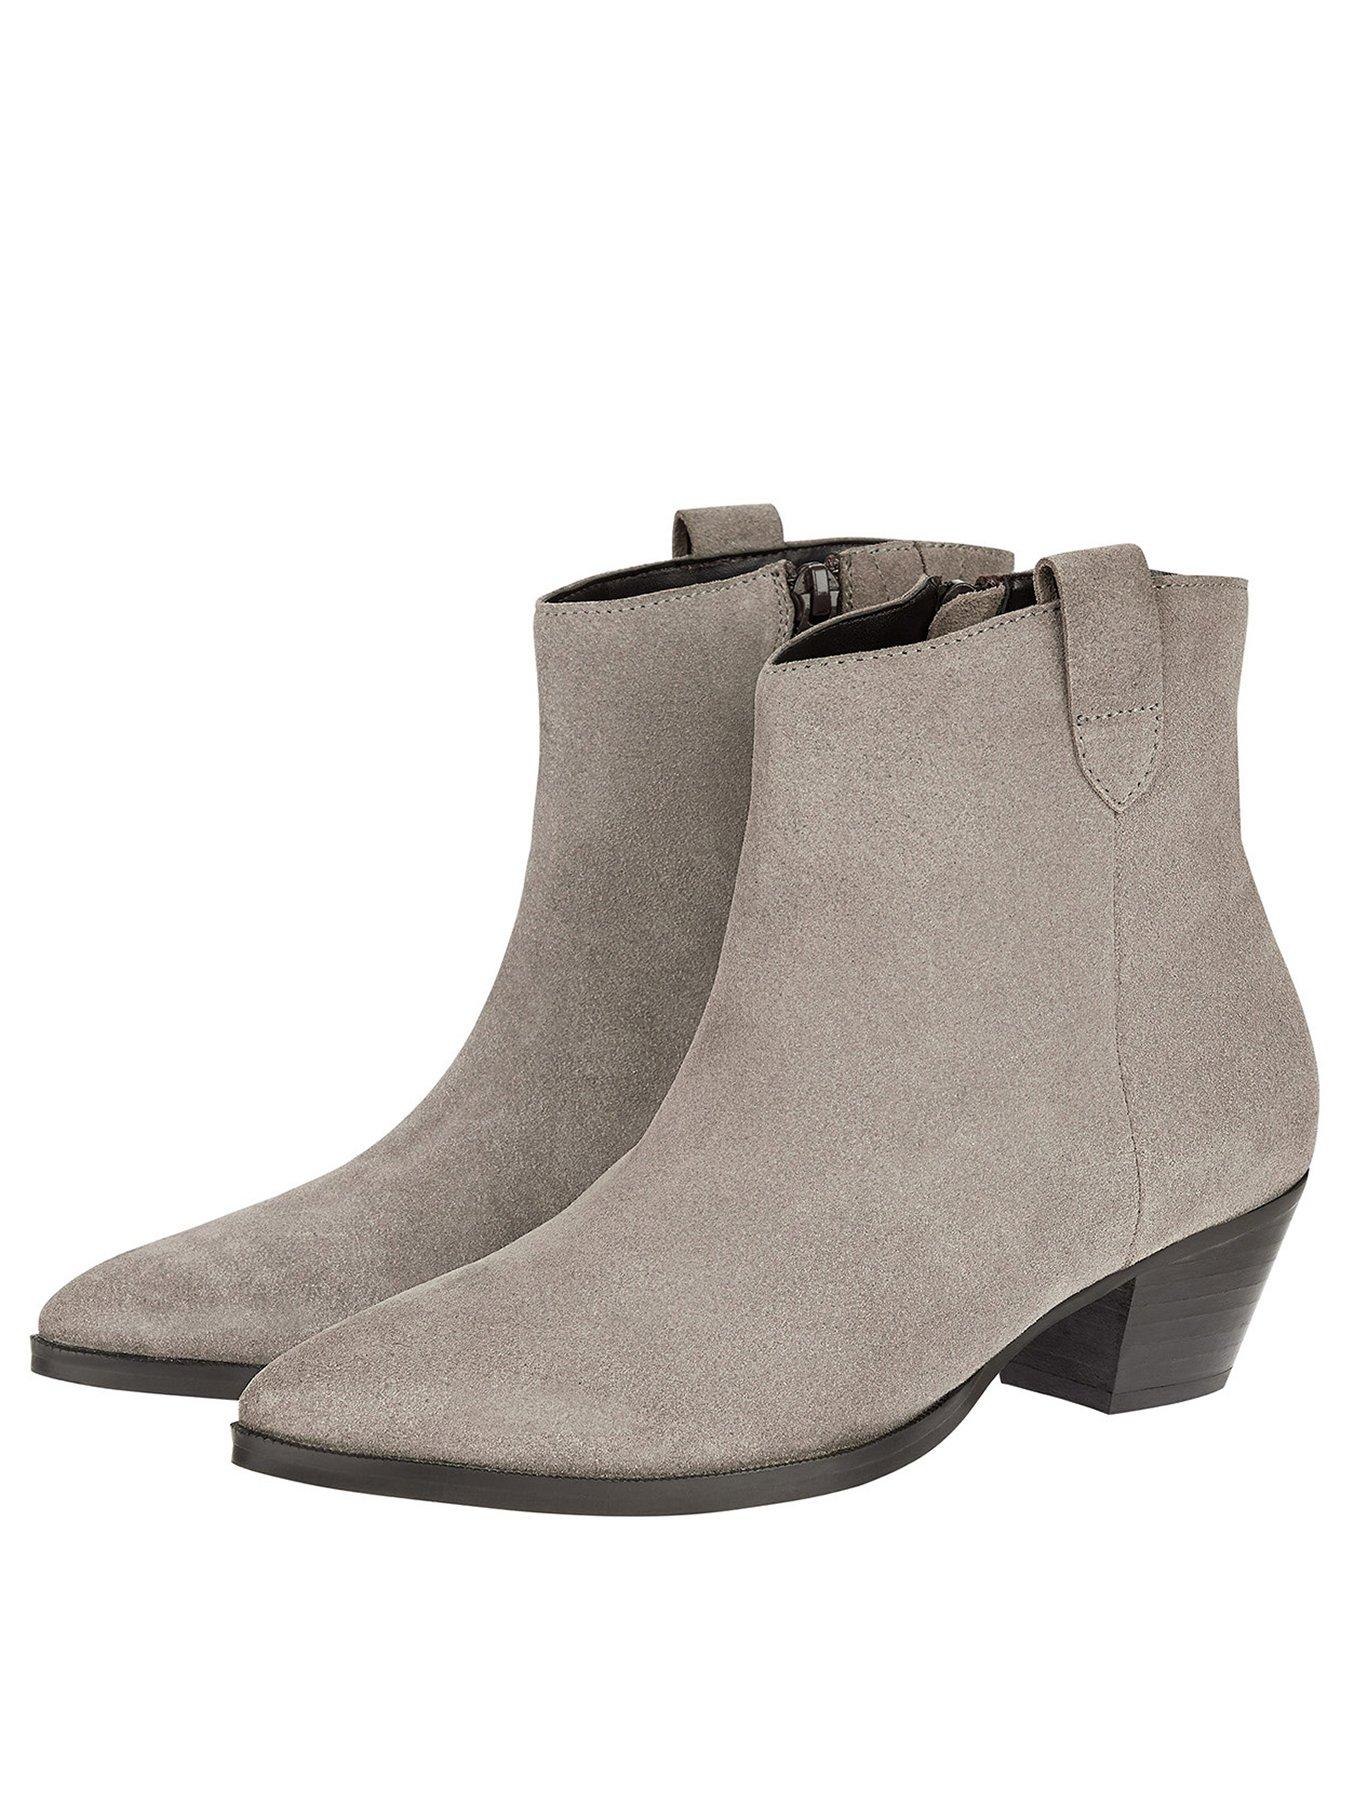 grey womens boots uk